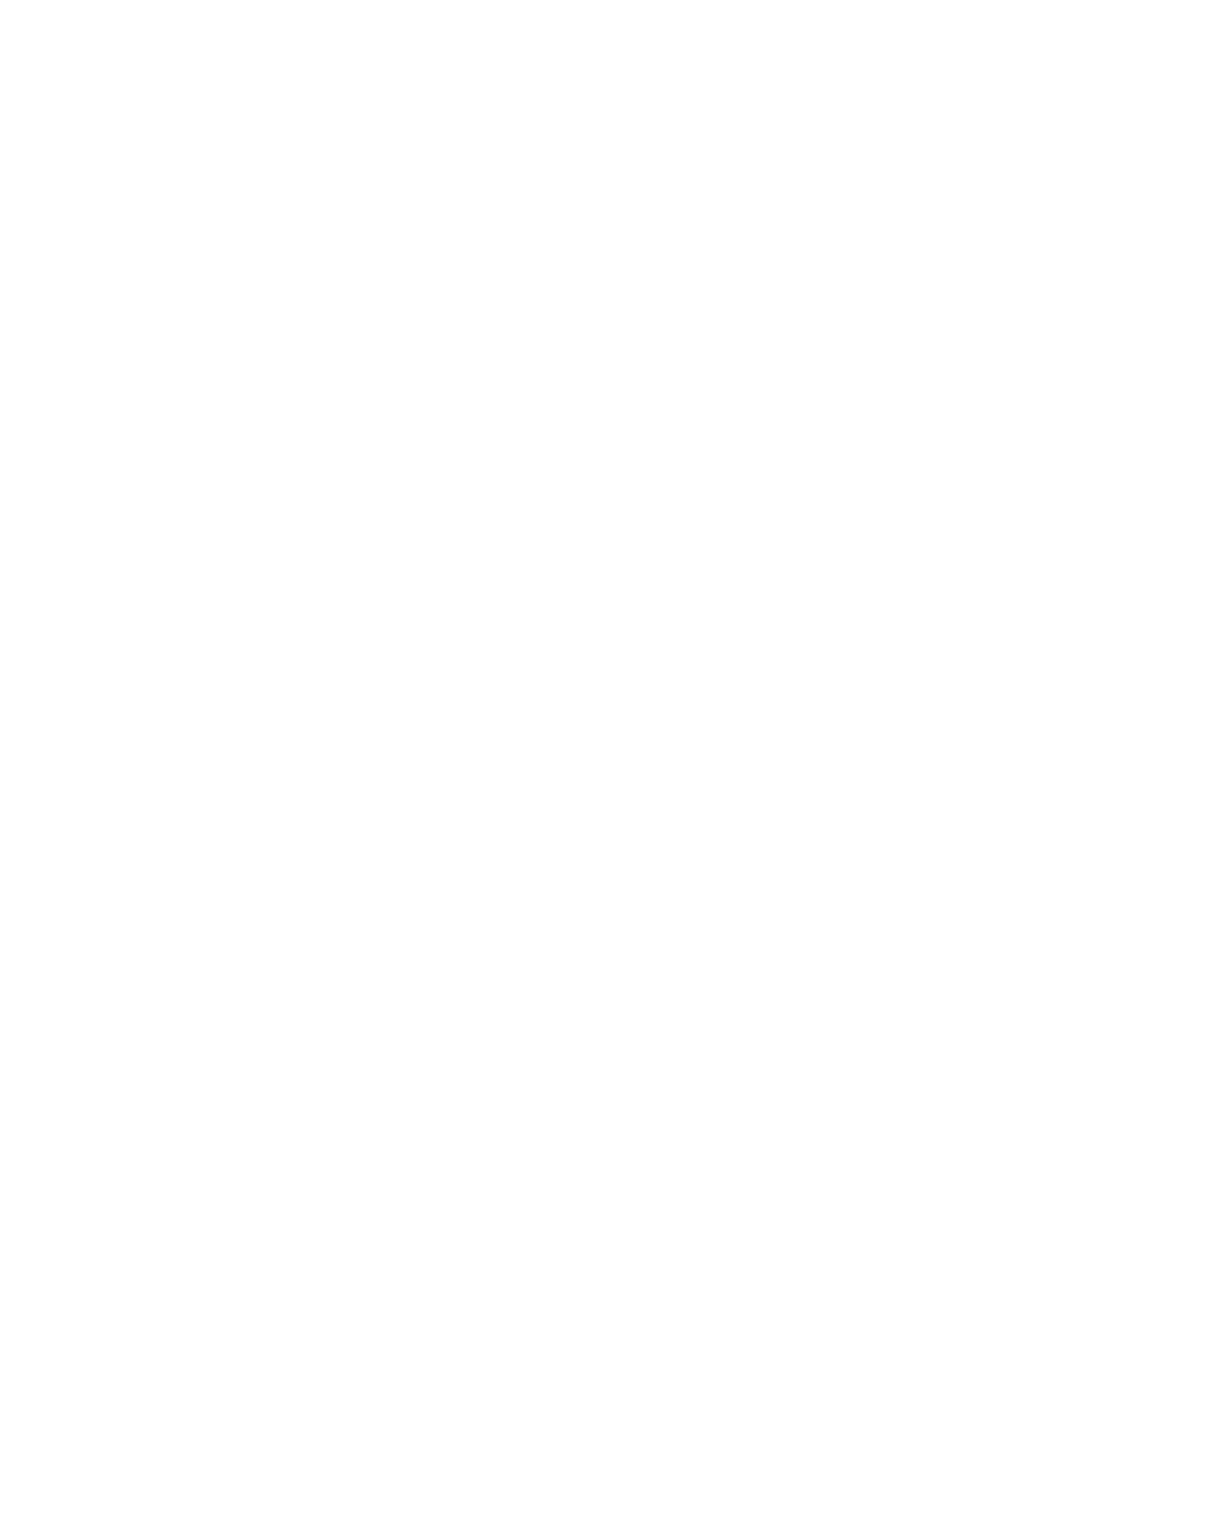 Draganfly logo pour fonds sombres (PNG transparent)